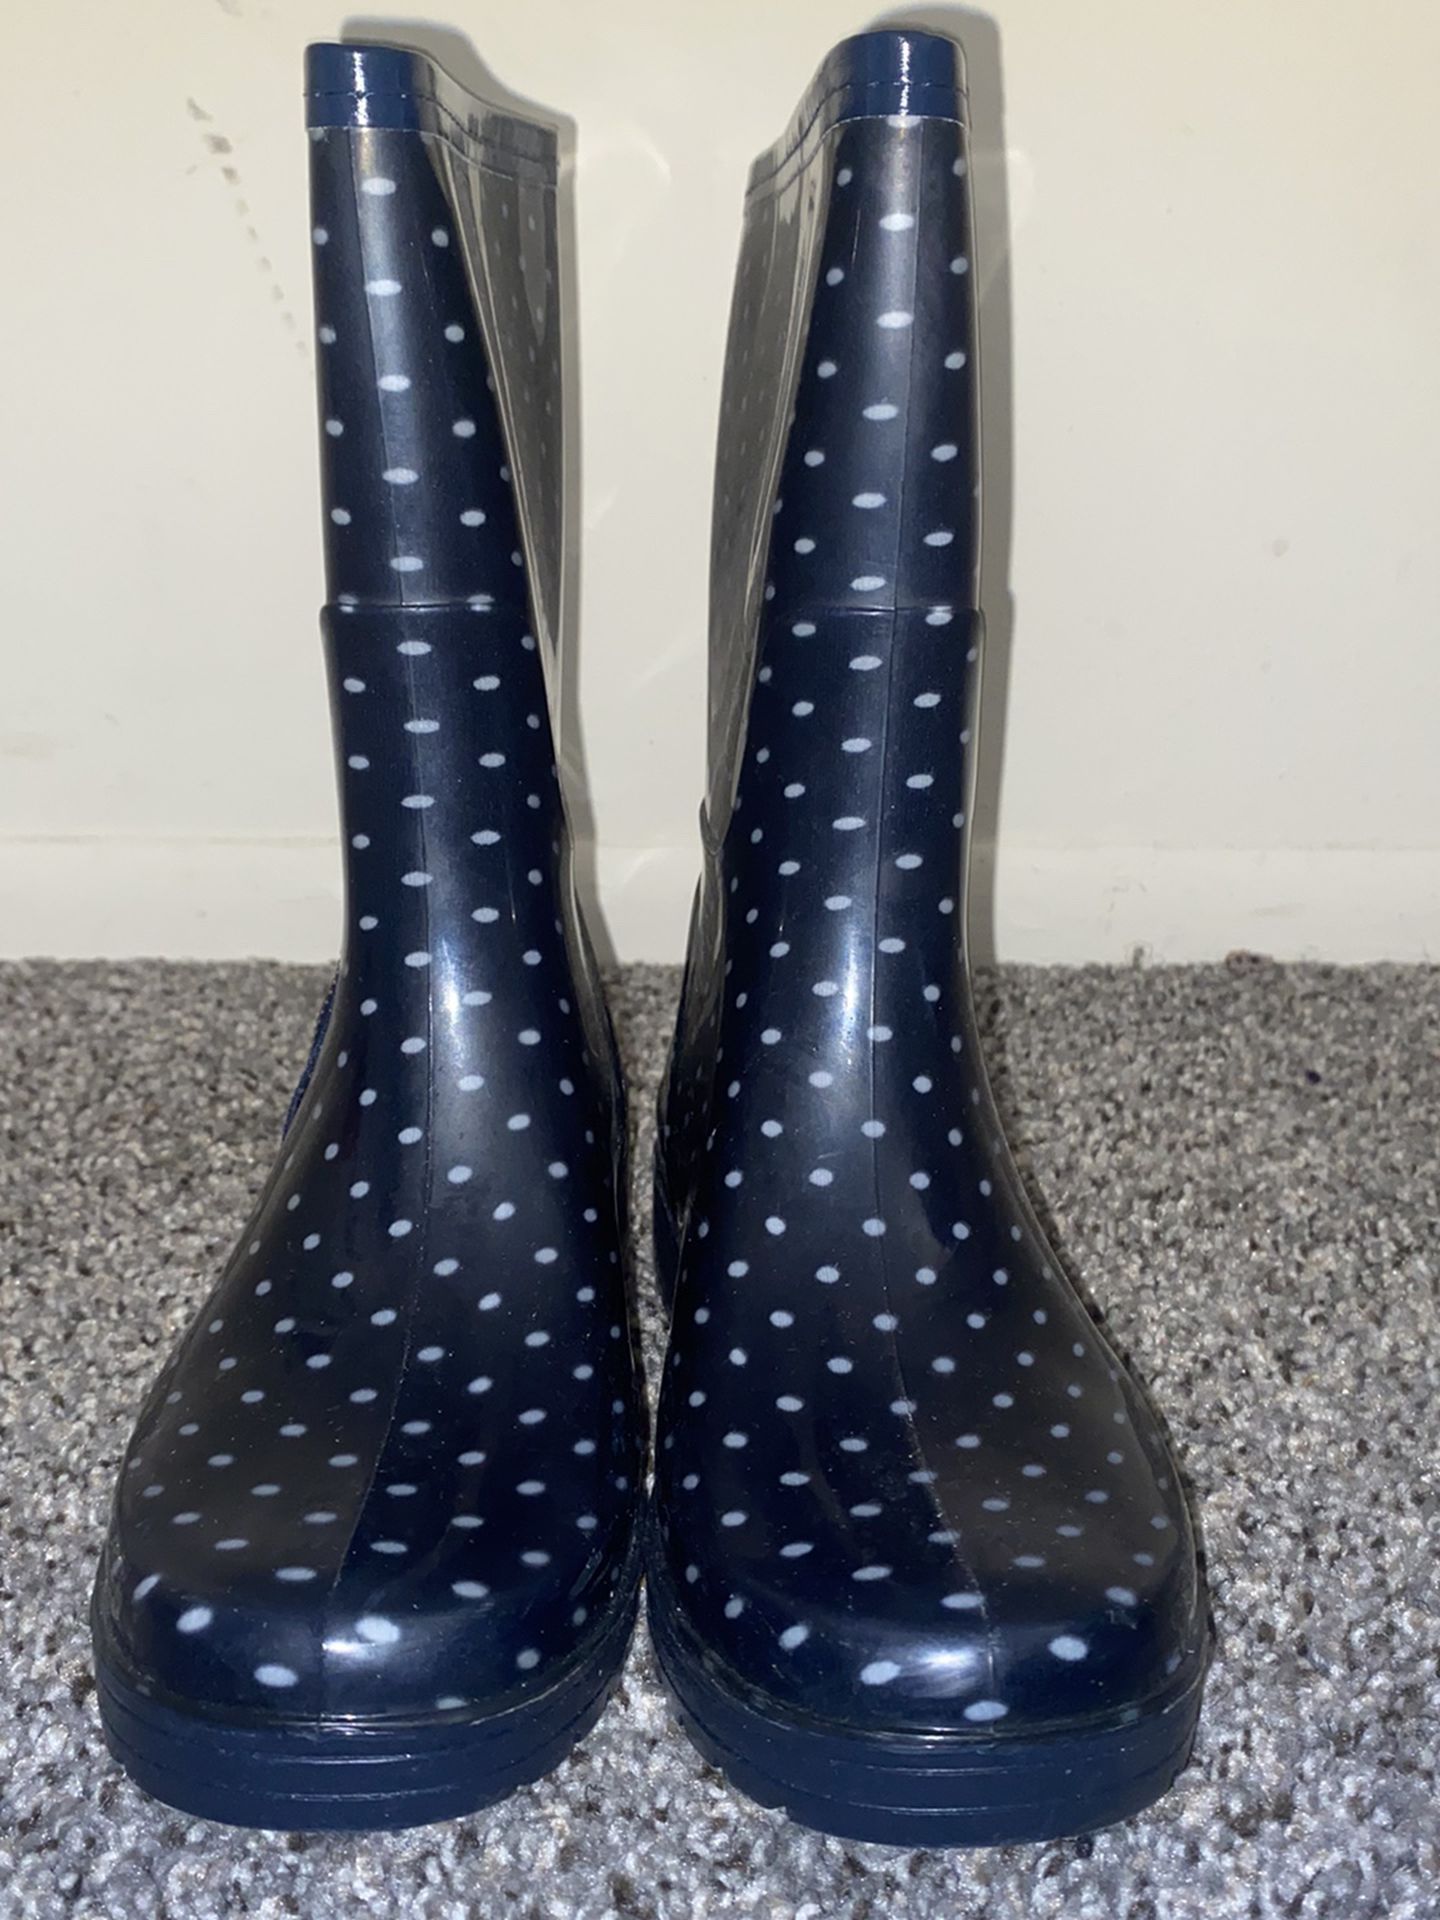 Navy Blue Polka Dot Rain Boots